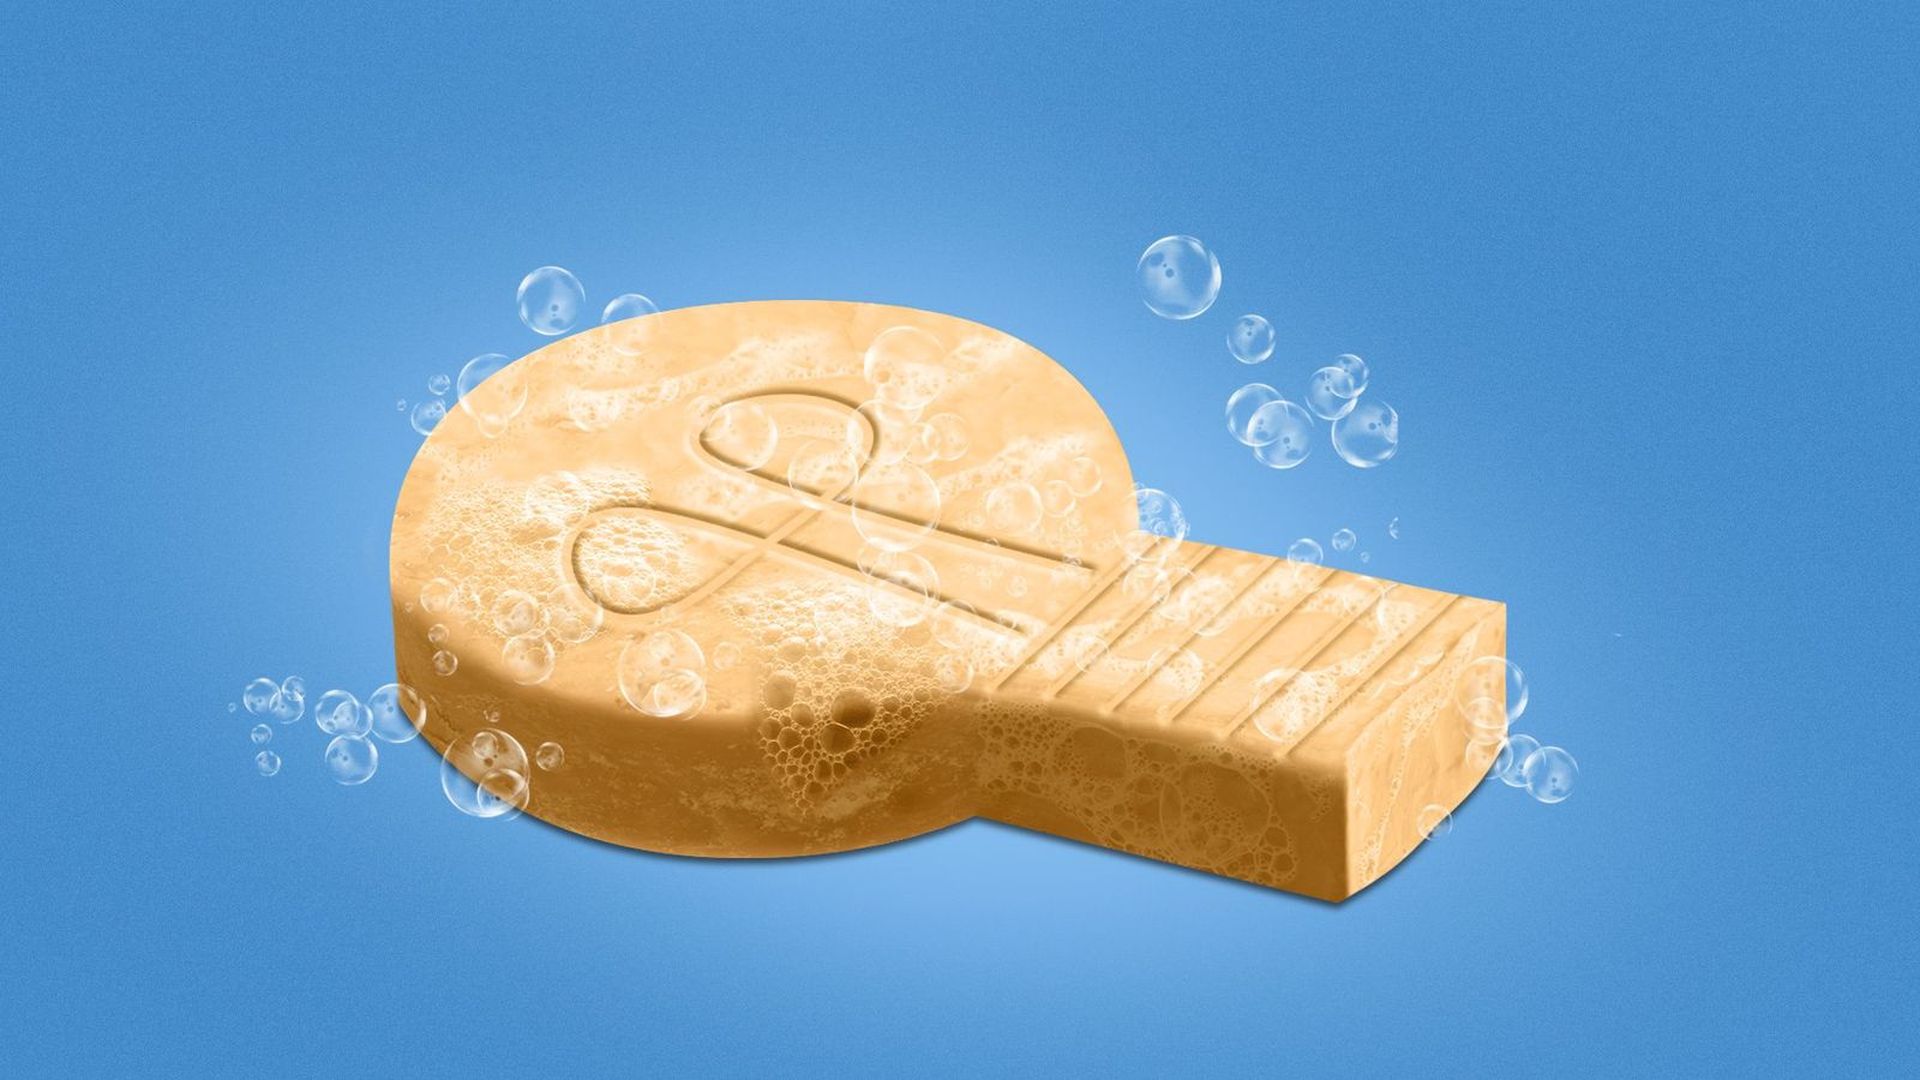 An illustration showing a bar of soap shaped like a lightbulb